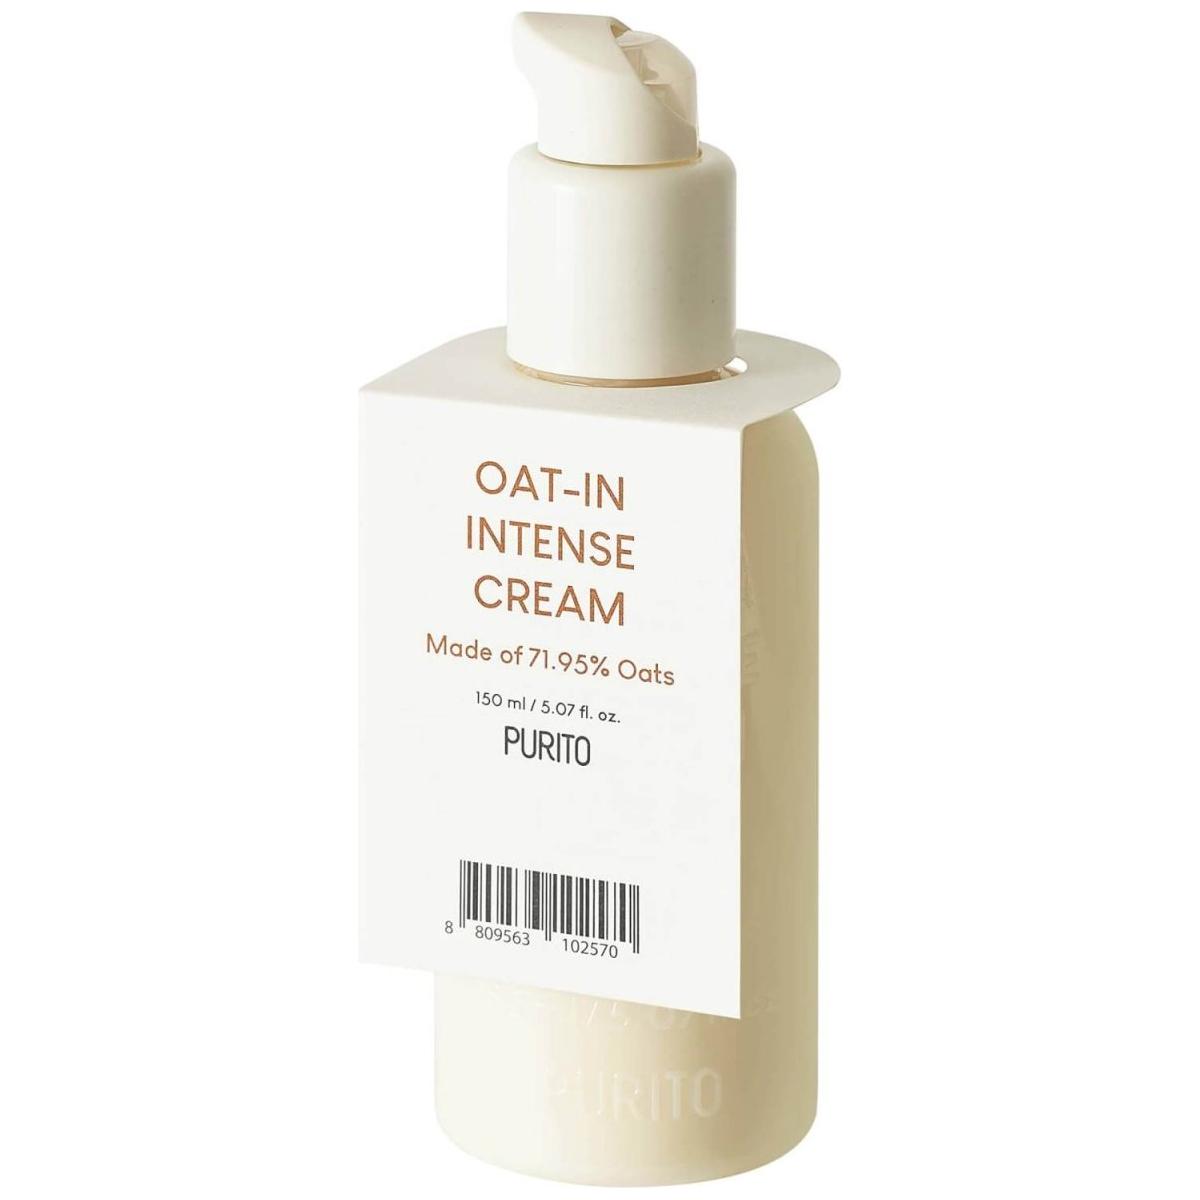 PURITO Oat-in Intense Cream 150ml - DG International Ventures Limited